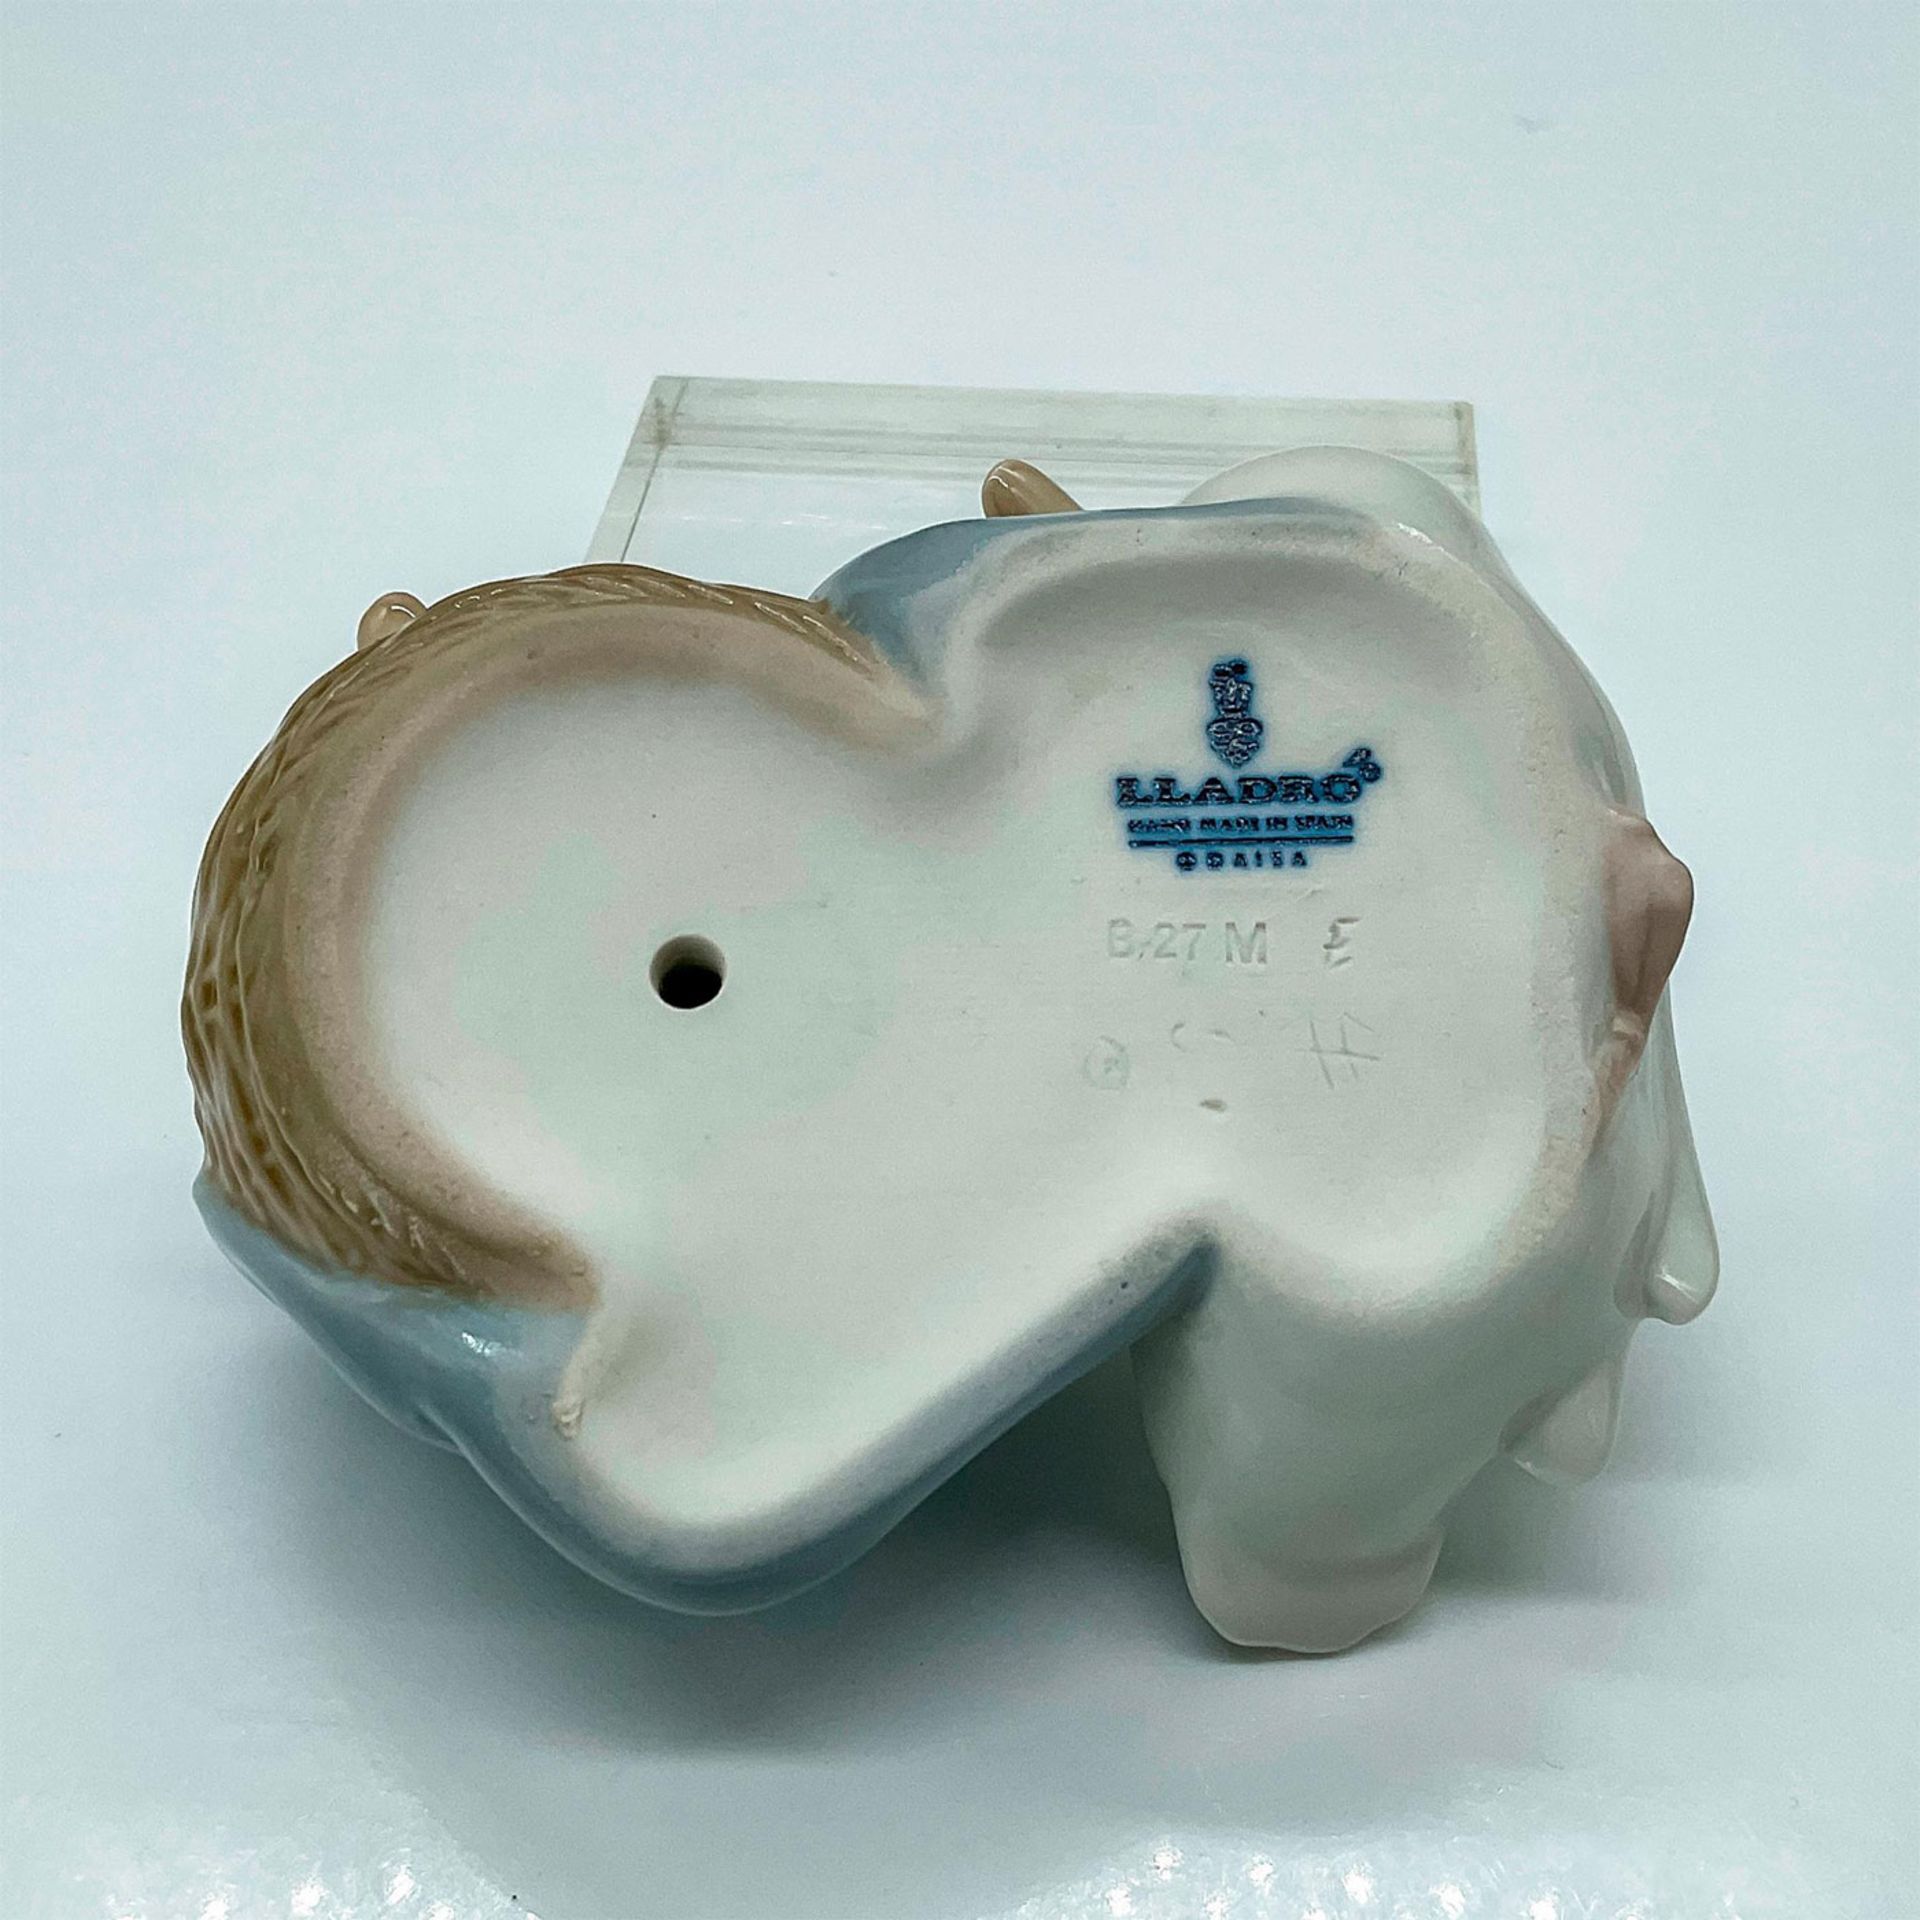 Ducks 1004895 - Lladro Porcelain Figurine - Image 3 of 3